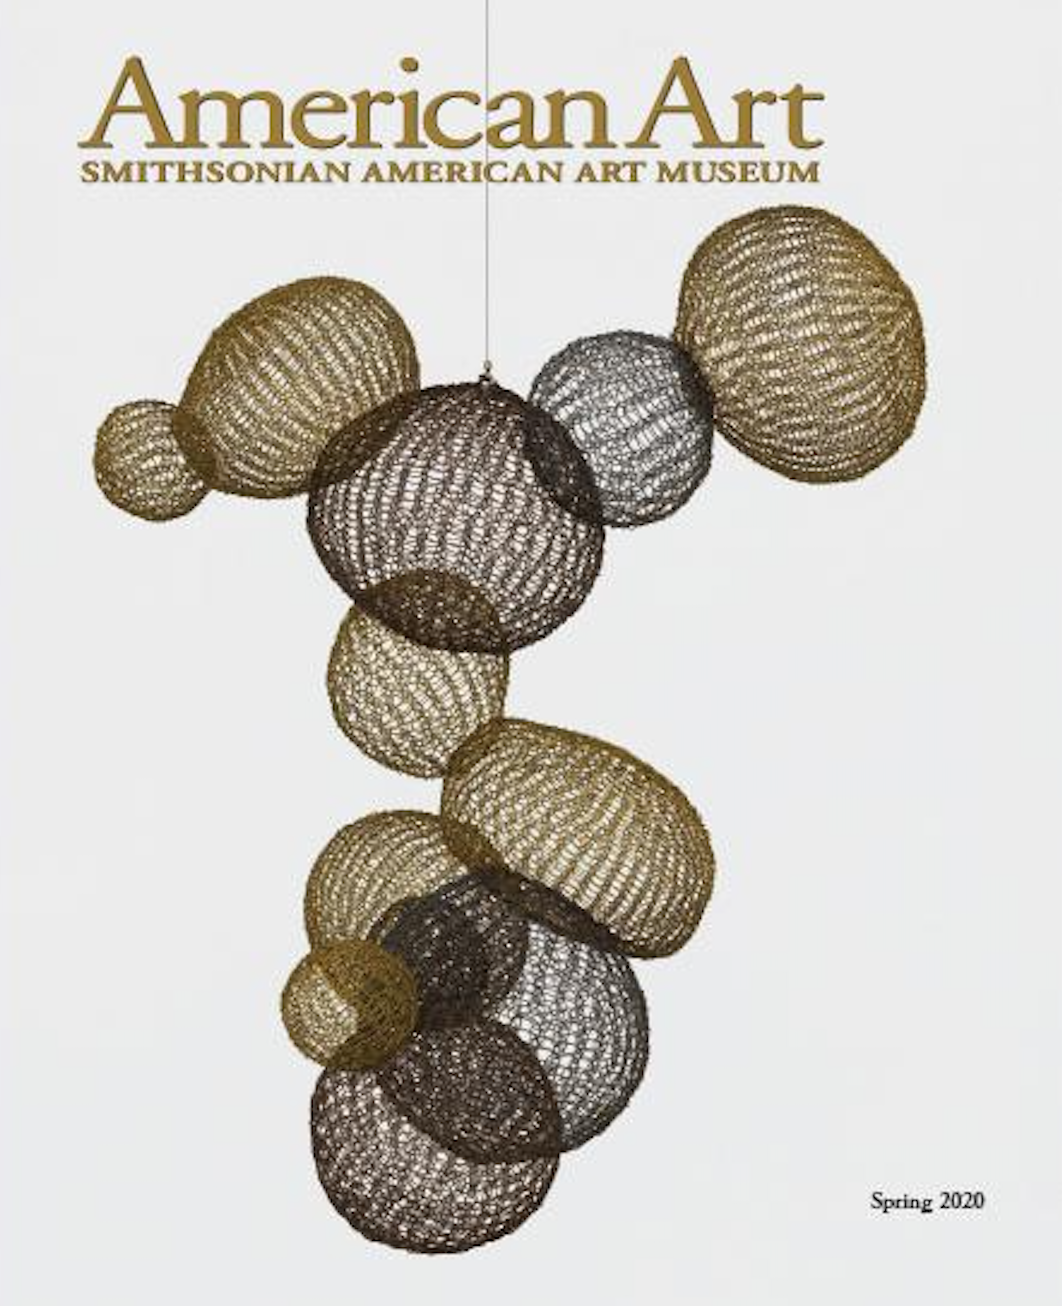  American Art, Spring 2020 - magazine cover 